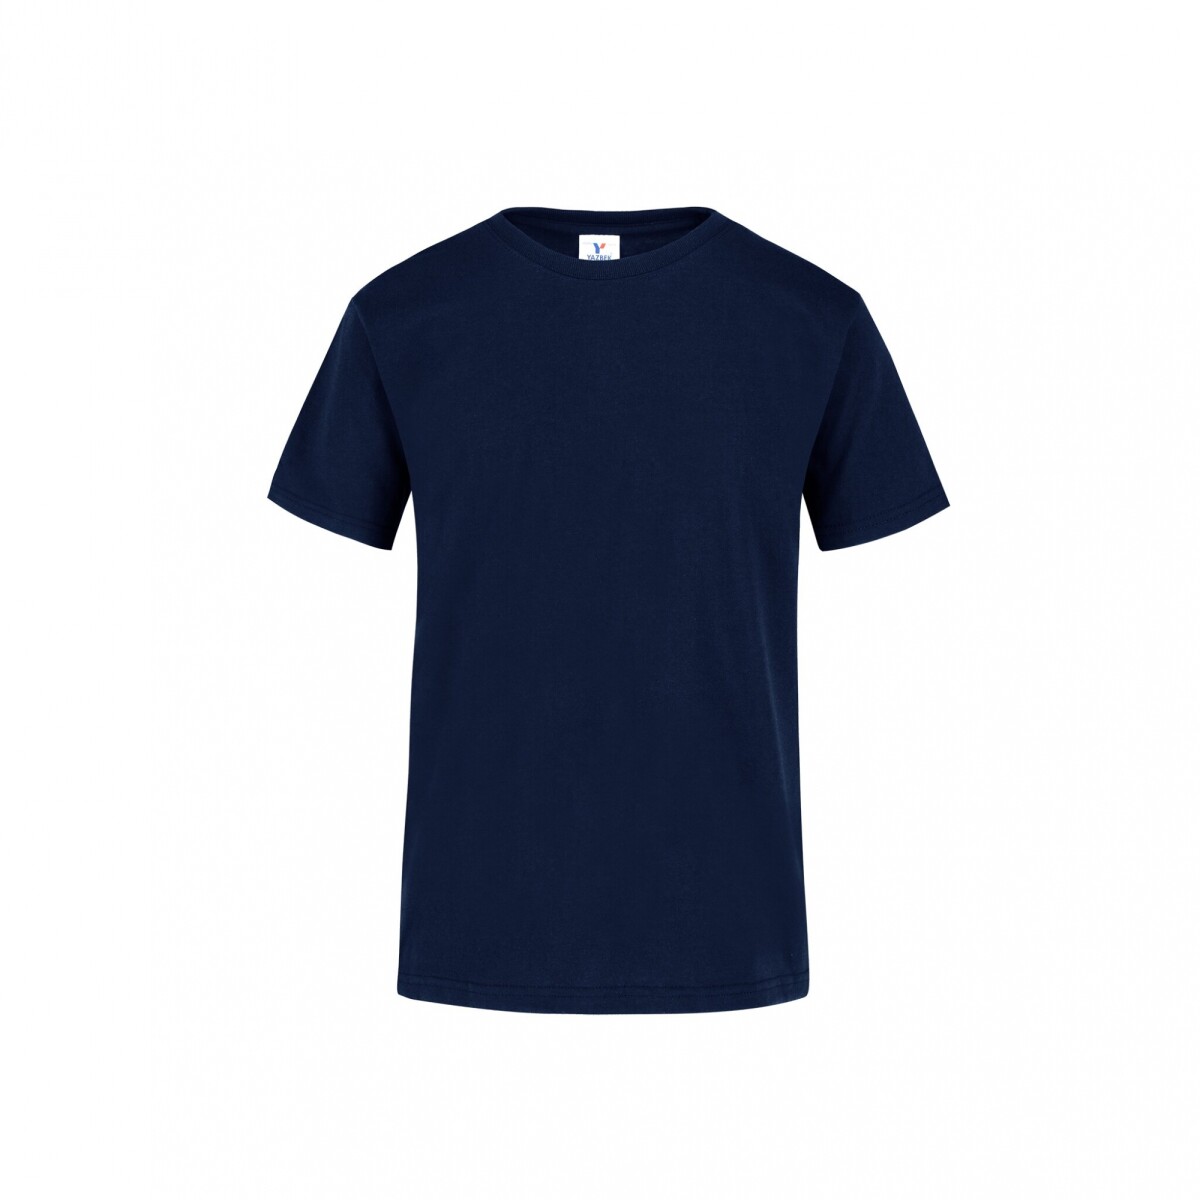 Camiseta a la base joven - Azul marino 